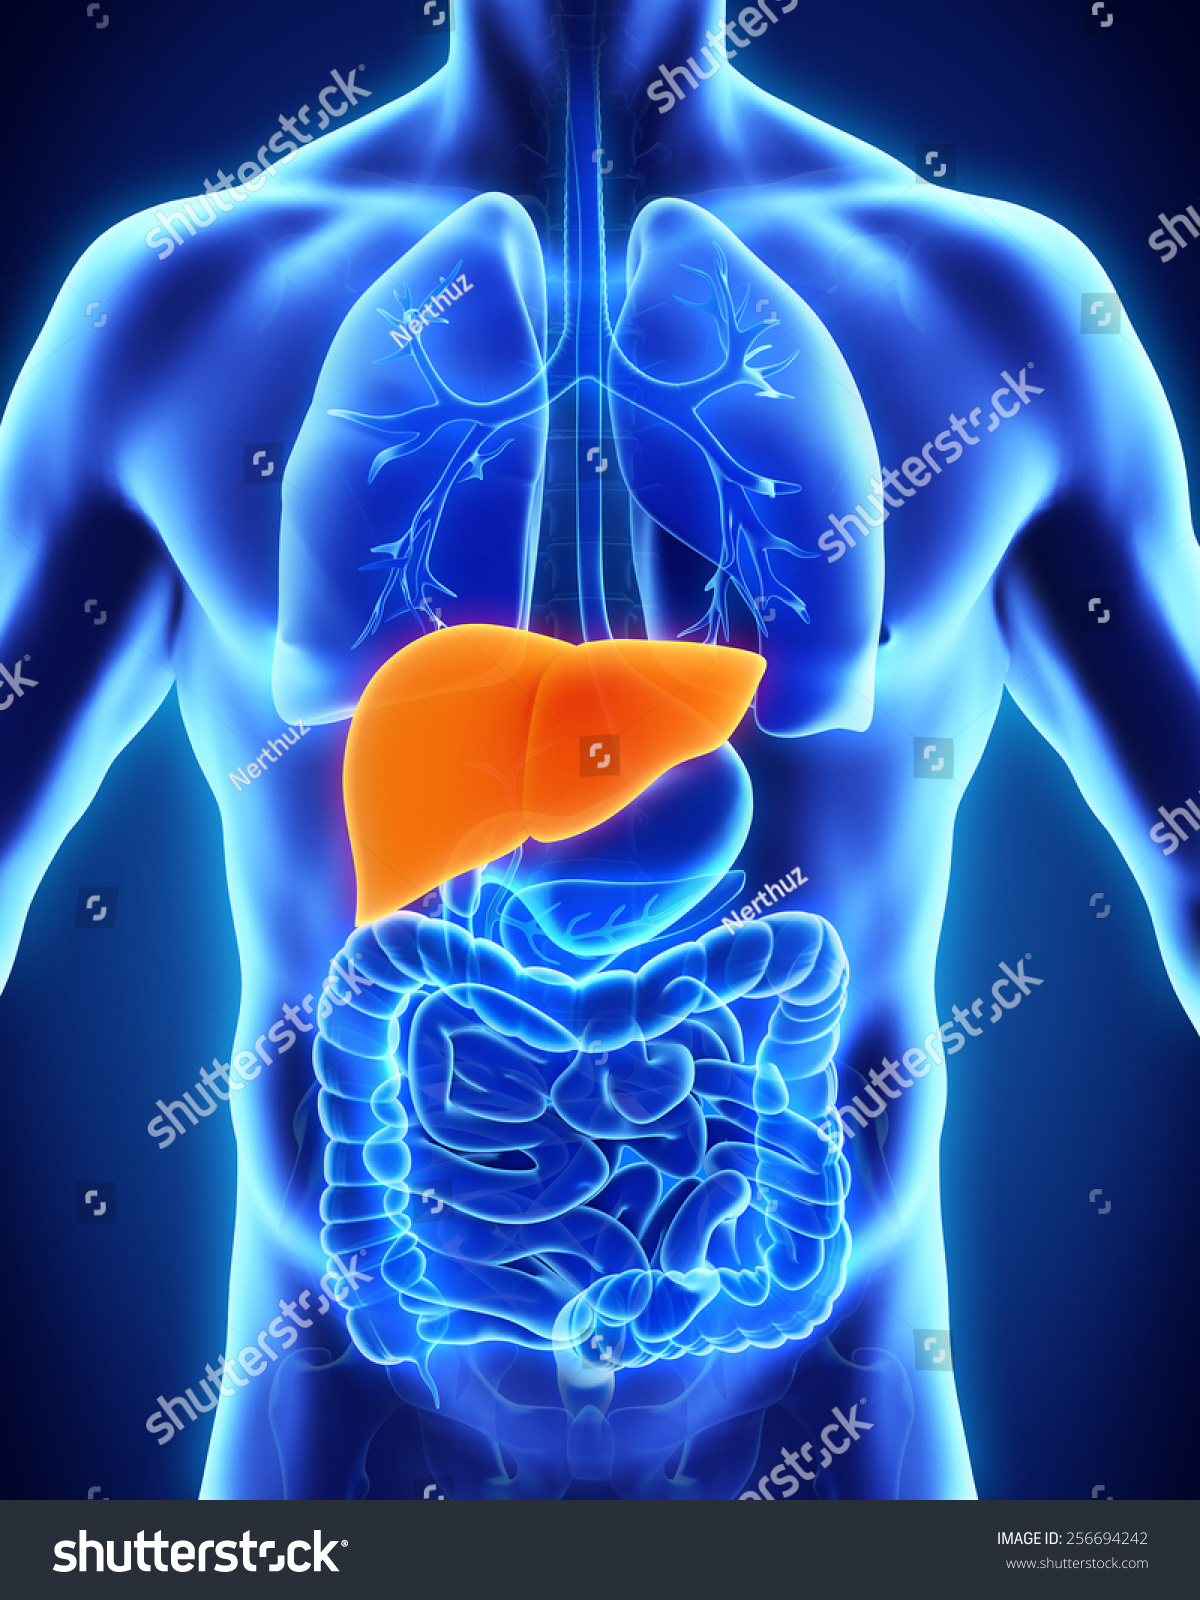 Human Liver Anatomy Stock Photo 256694242 : Shutterstock